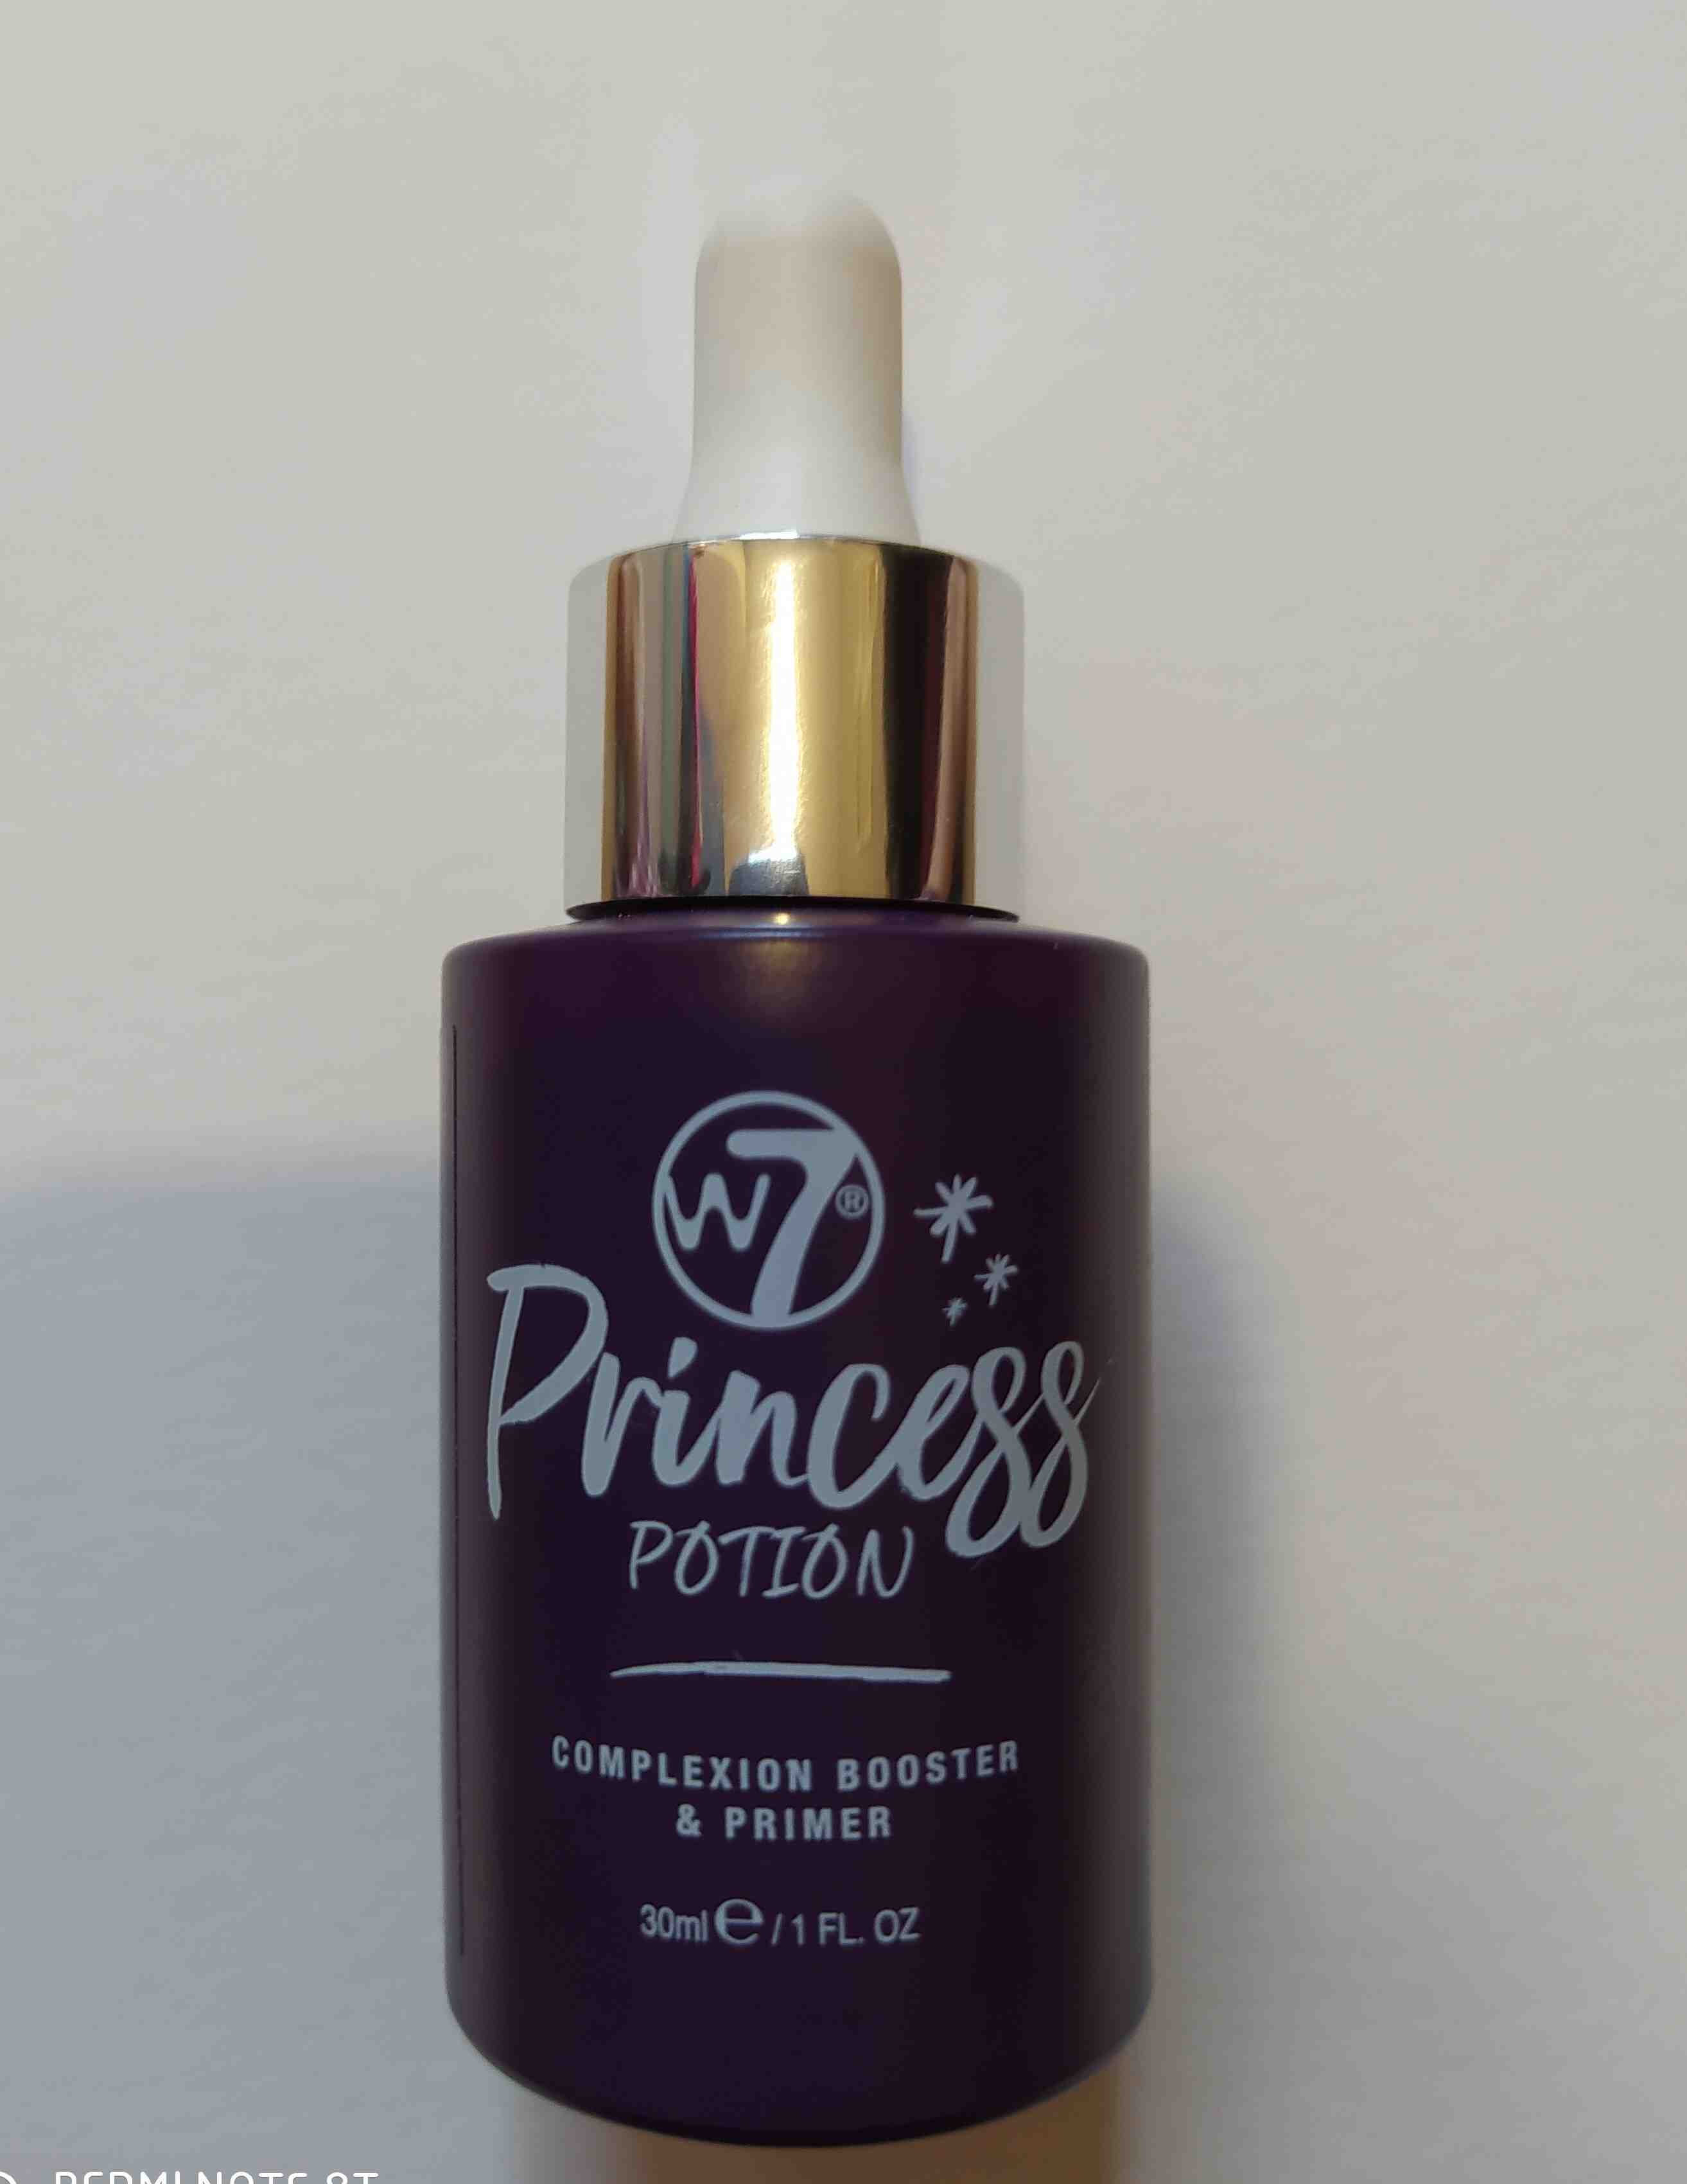 princess potion w7. complexion booster - Product - en